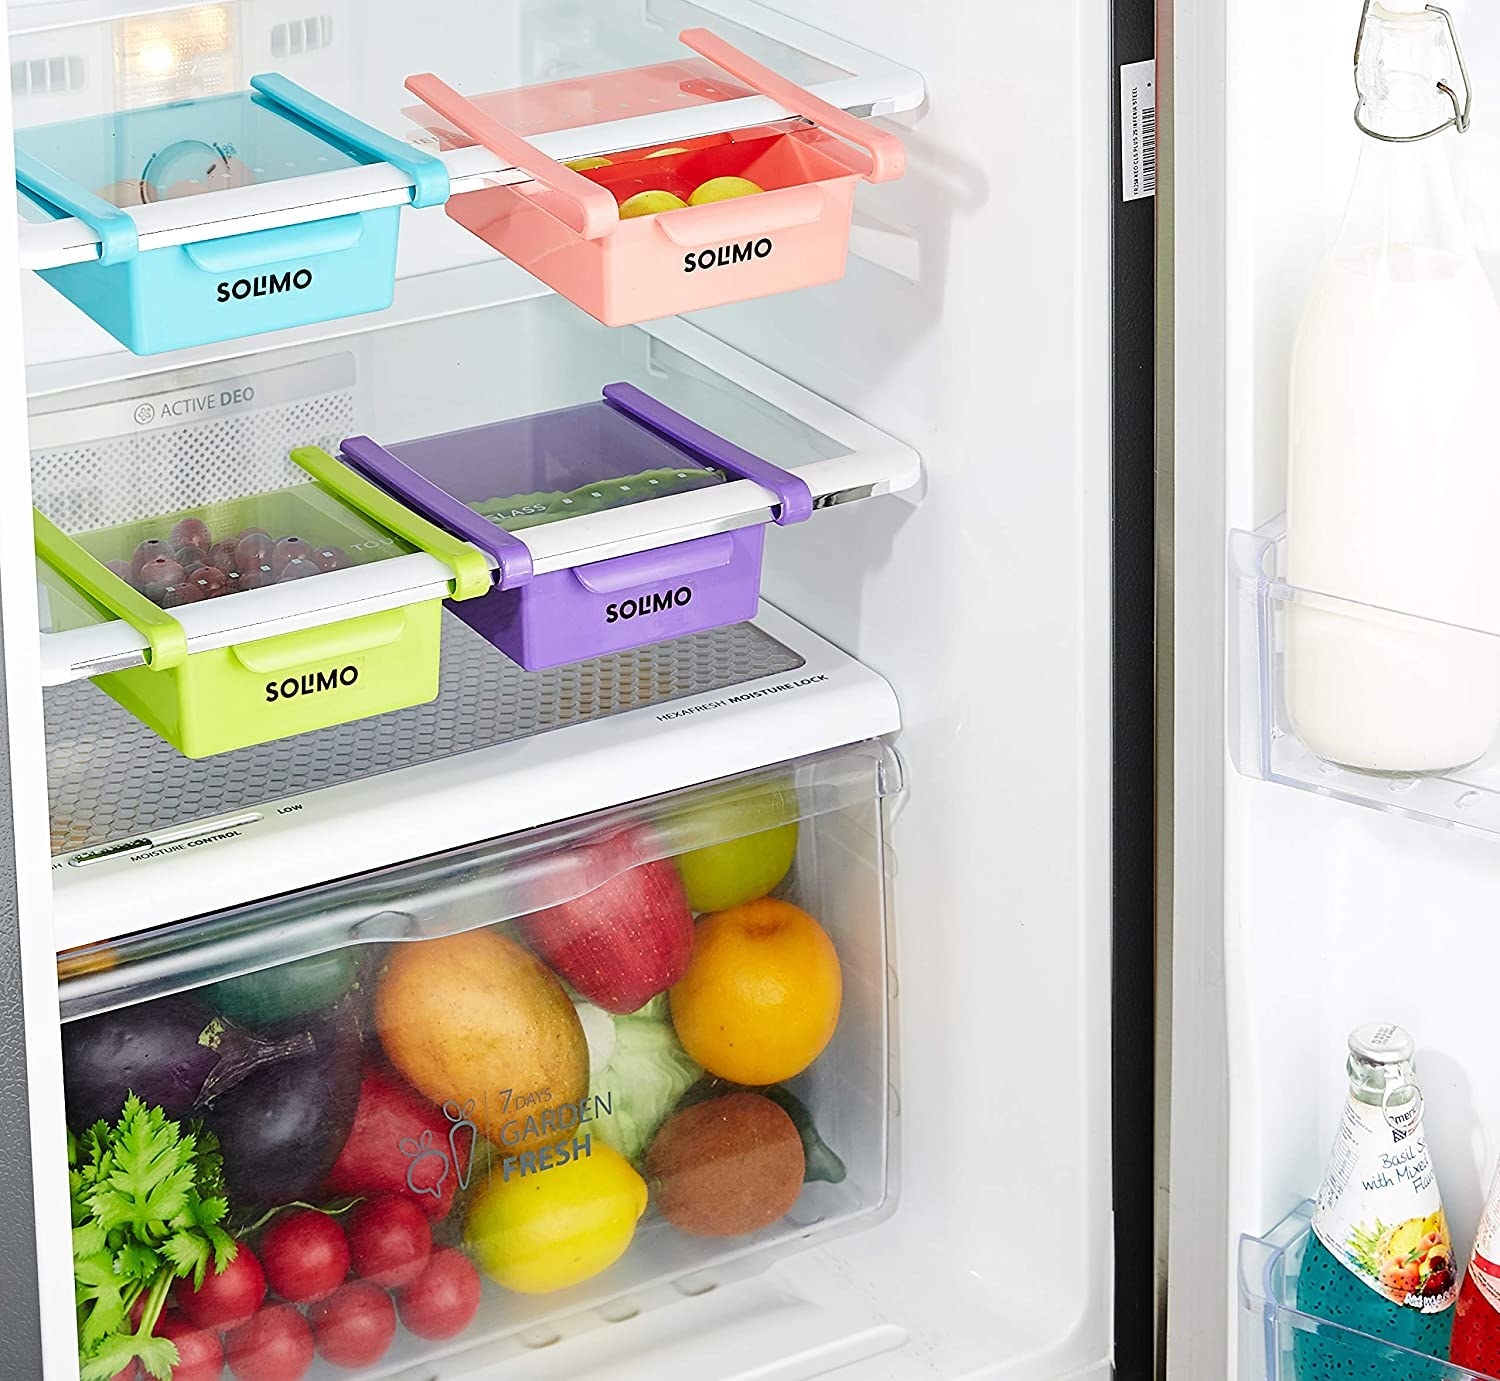 A set of fridge storage bins with food items in them 